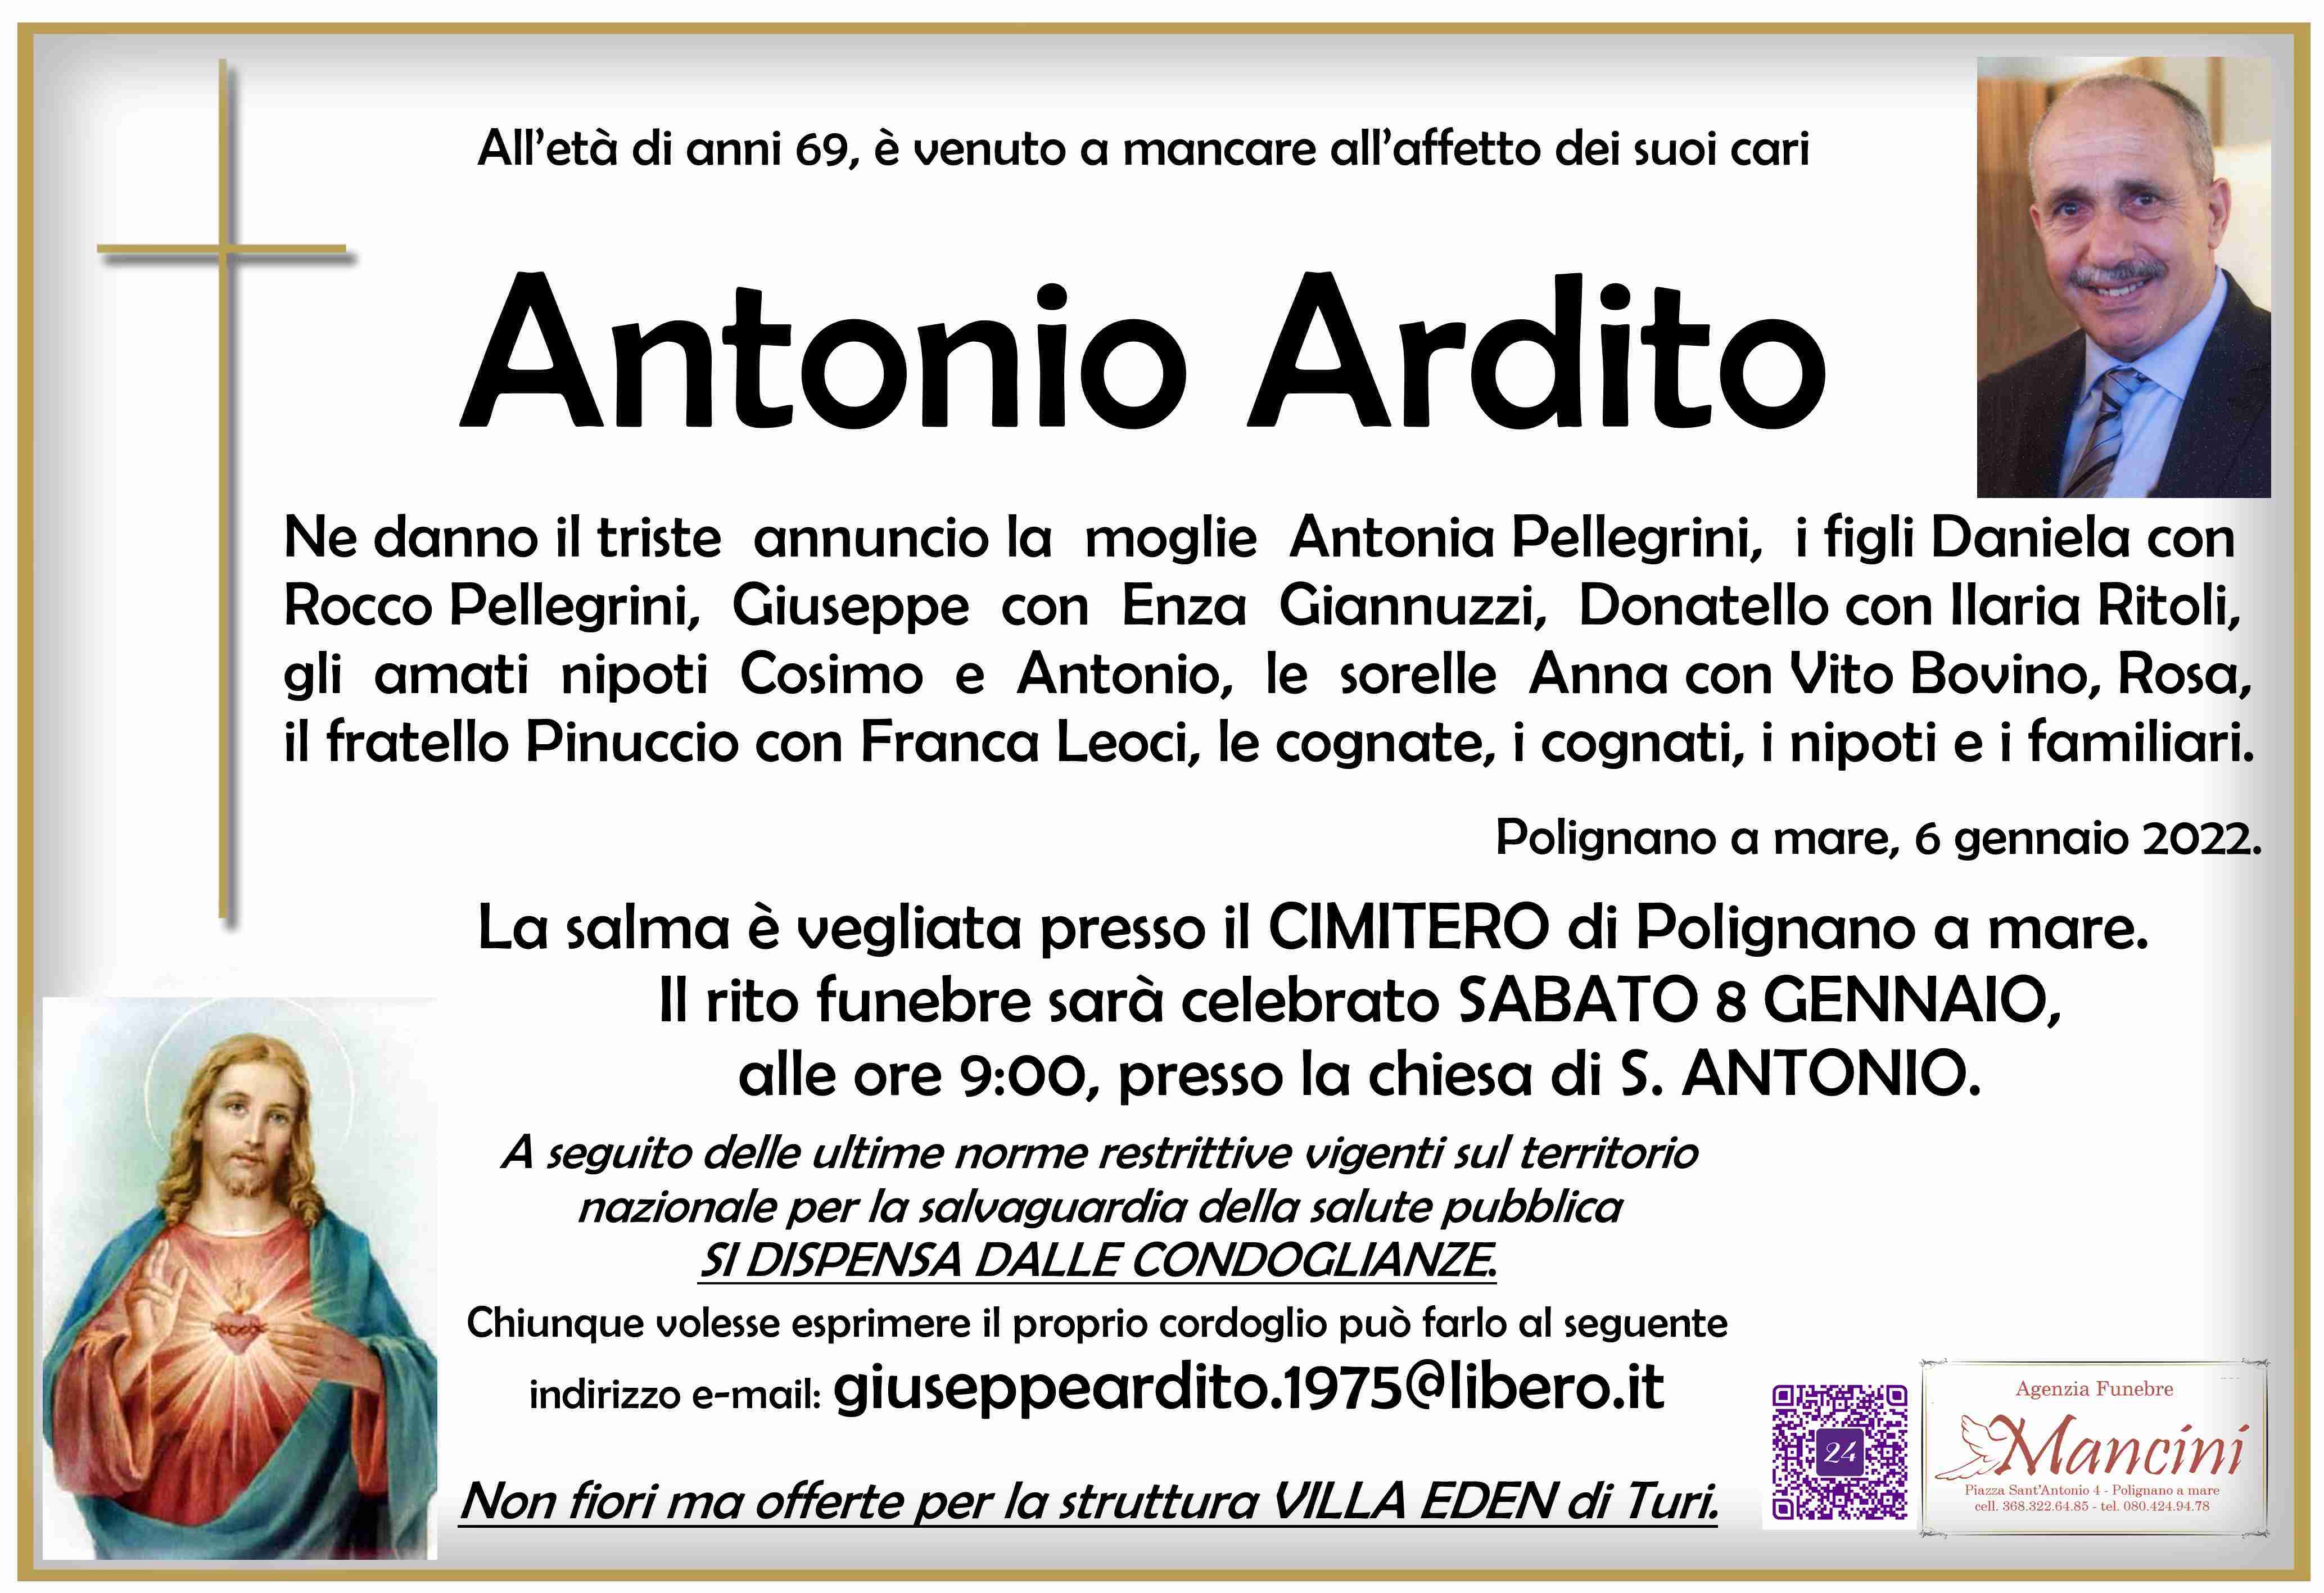 Antonio Ardito